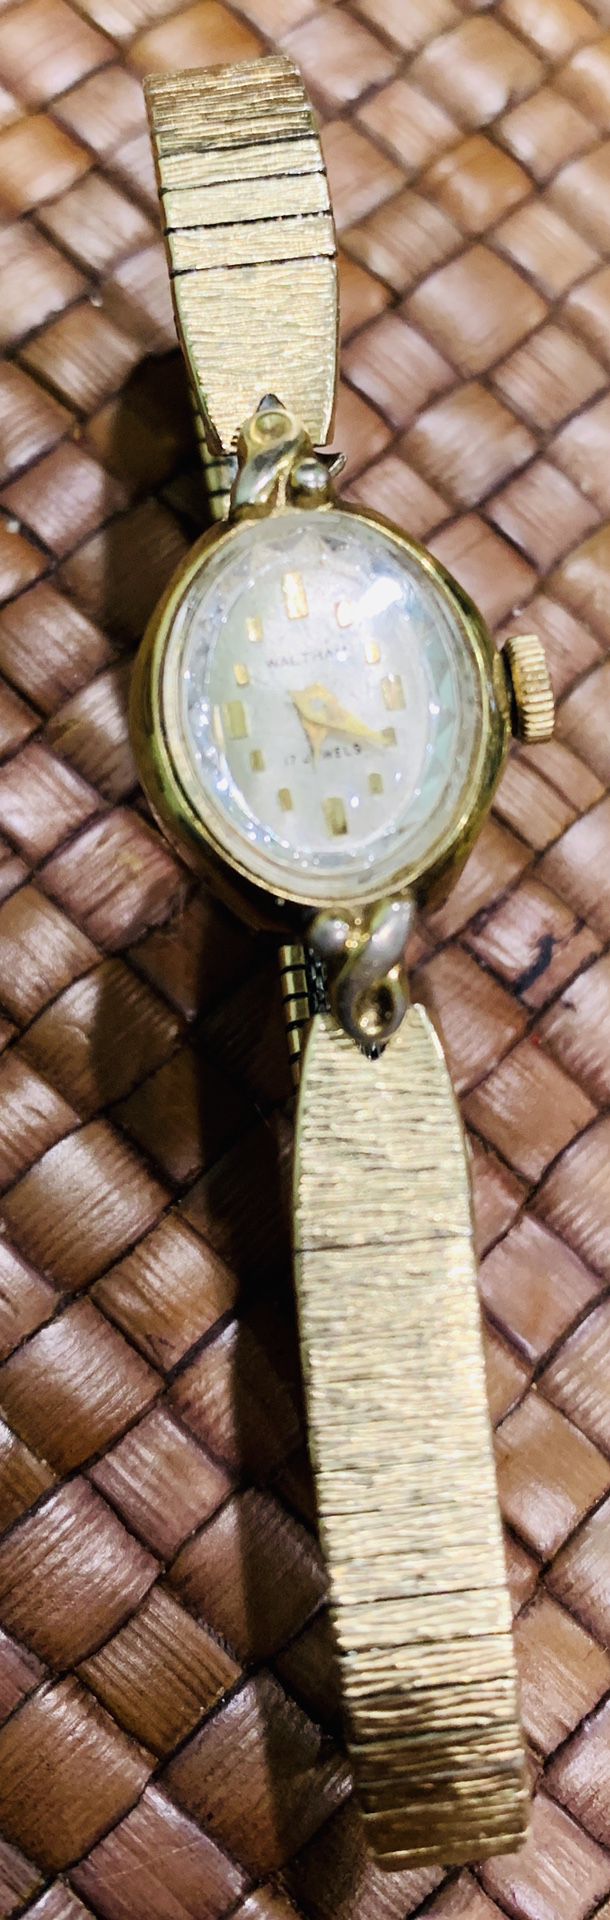 Vintage Waltham 10 k gold watch, beautiful